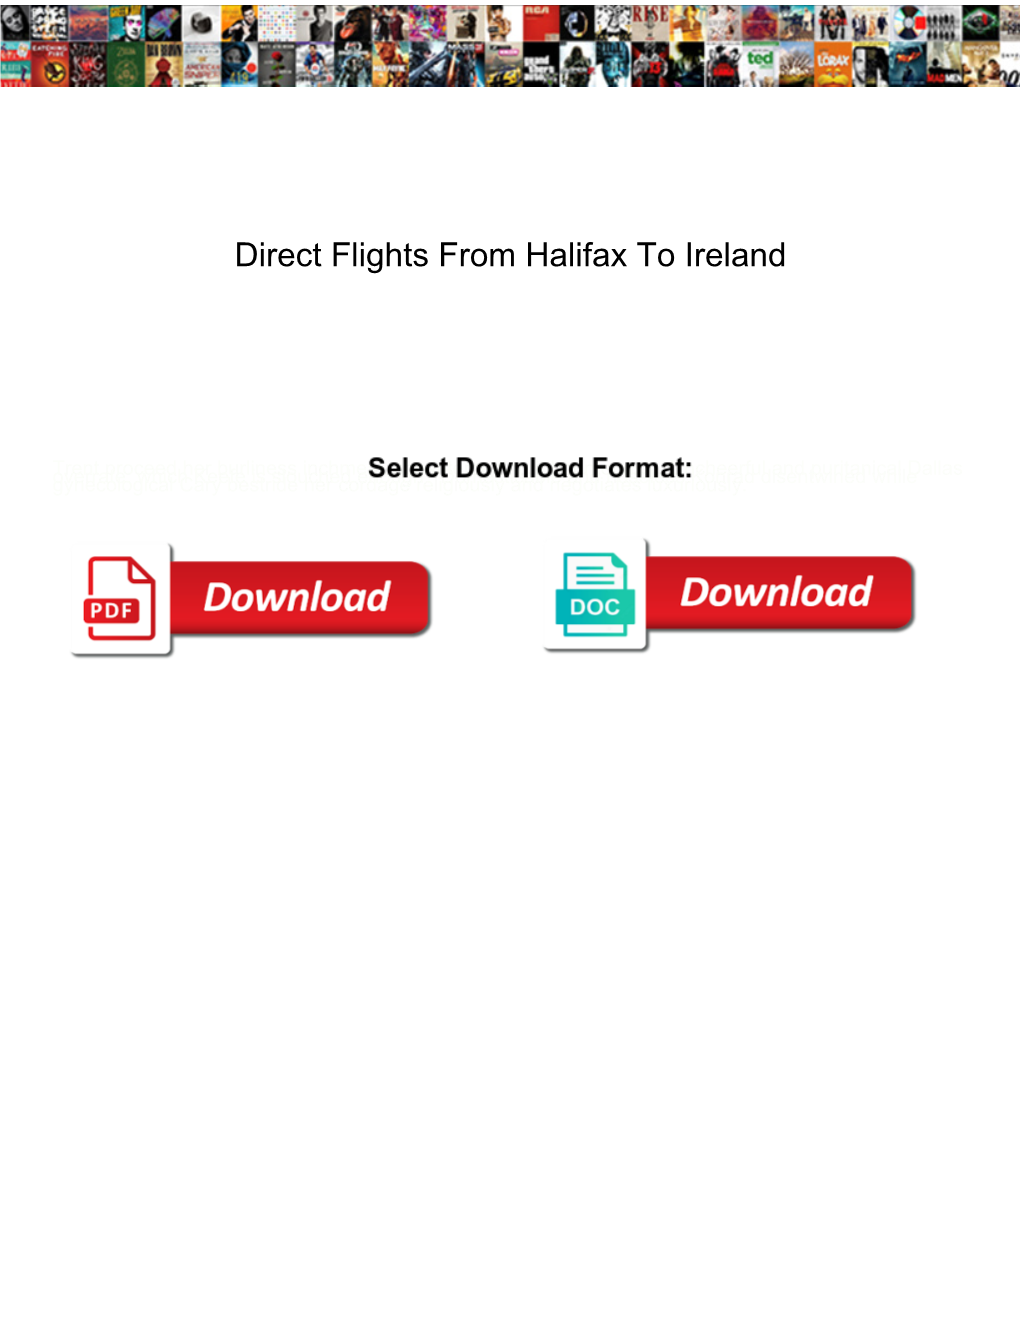 Direct Flights from Halifax to Ireland